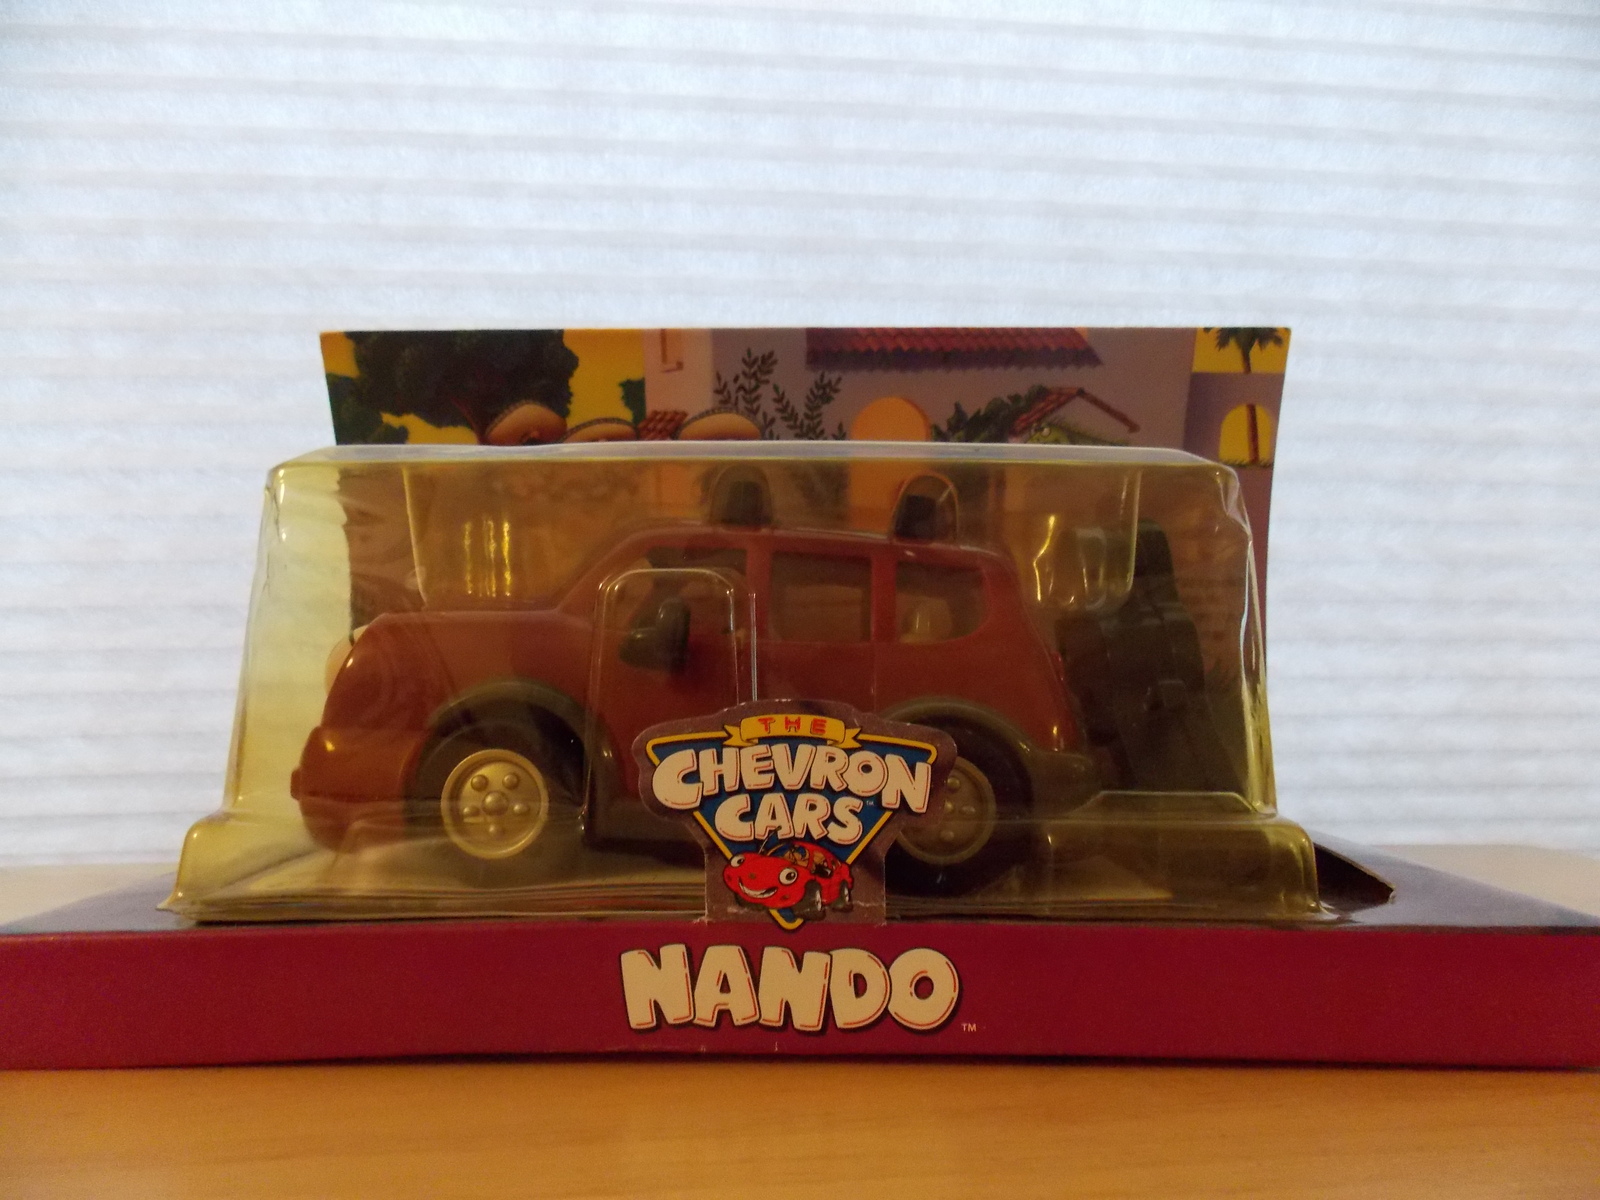 1999 Chevron Cars Nando  - $15.00